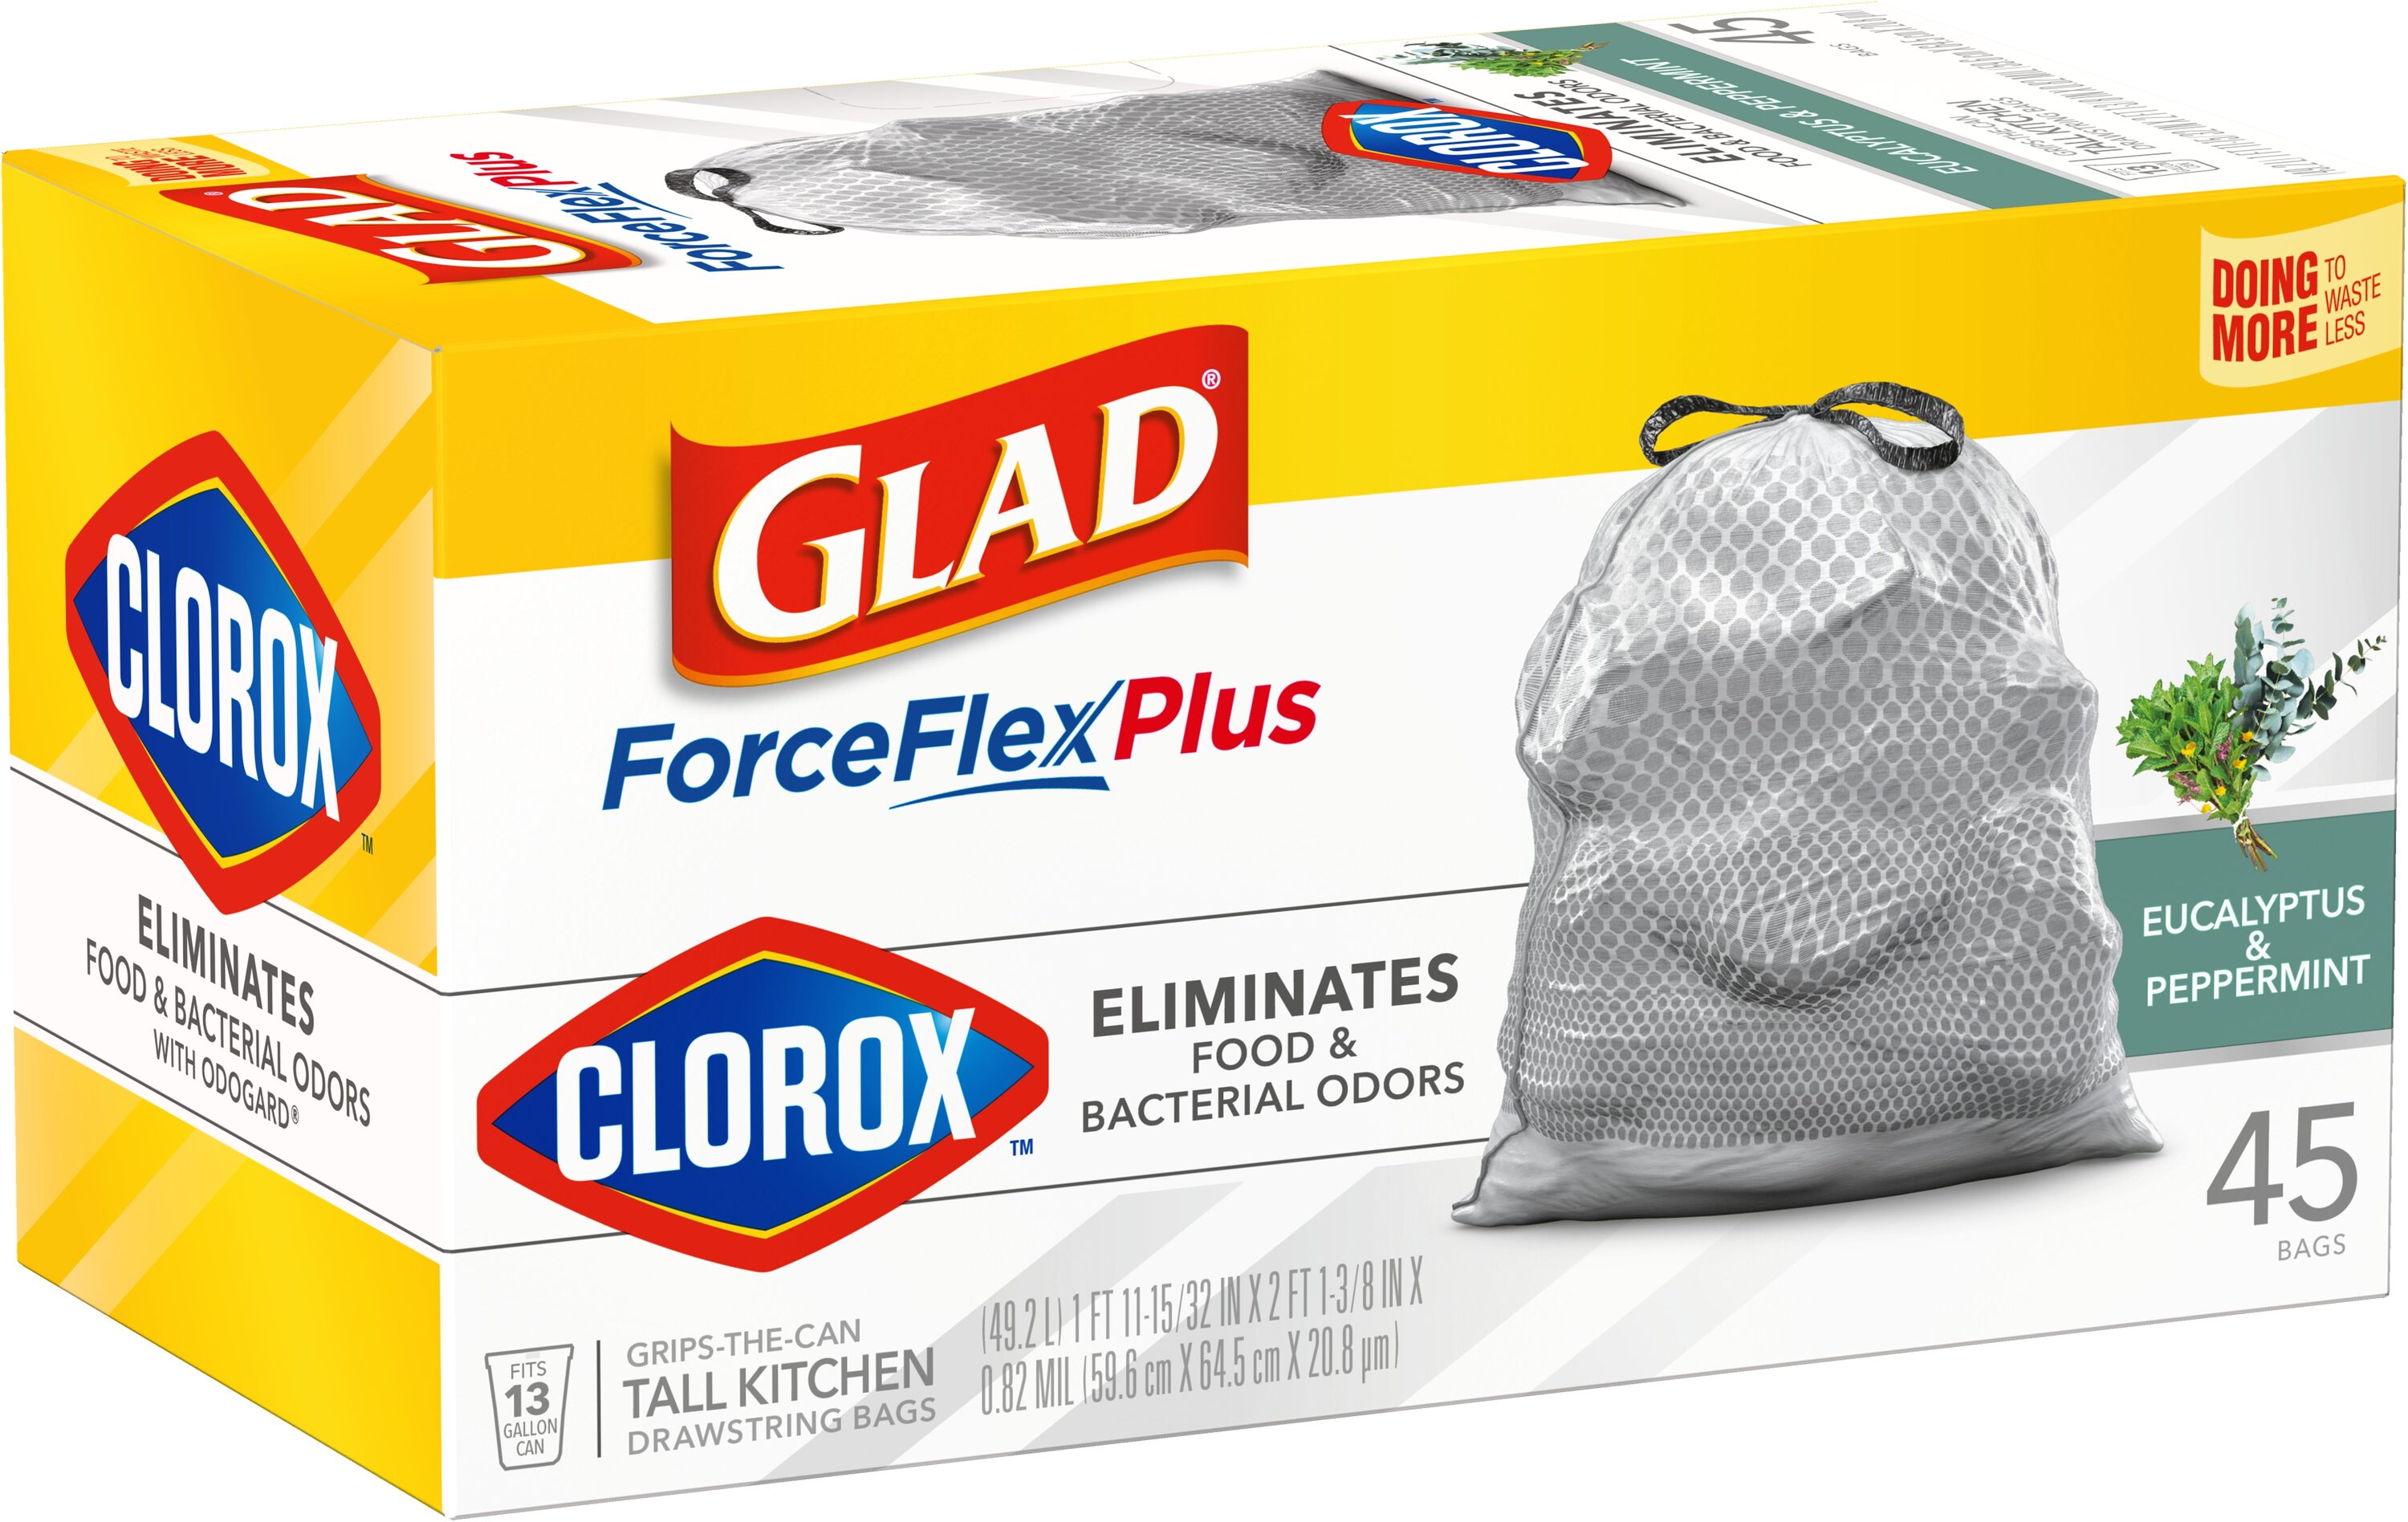 Glad ForceFlex Plus Clorox Eucalyptus & Mint Drawstring Tall Kitchen 13  Gallon Trash Bags - Shop Trash Bags at H-E-B